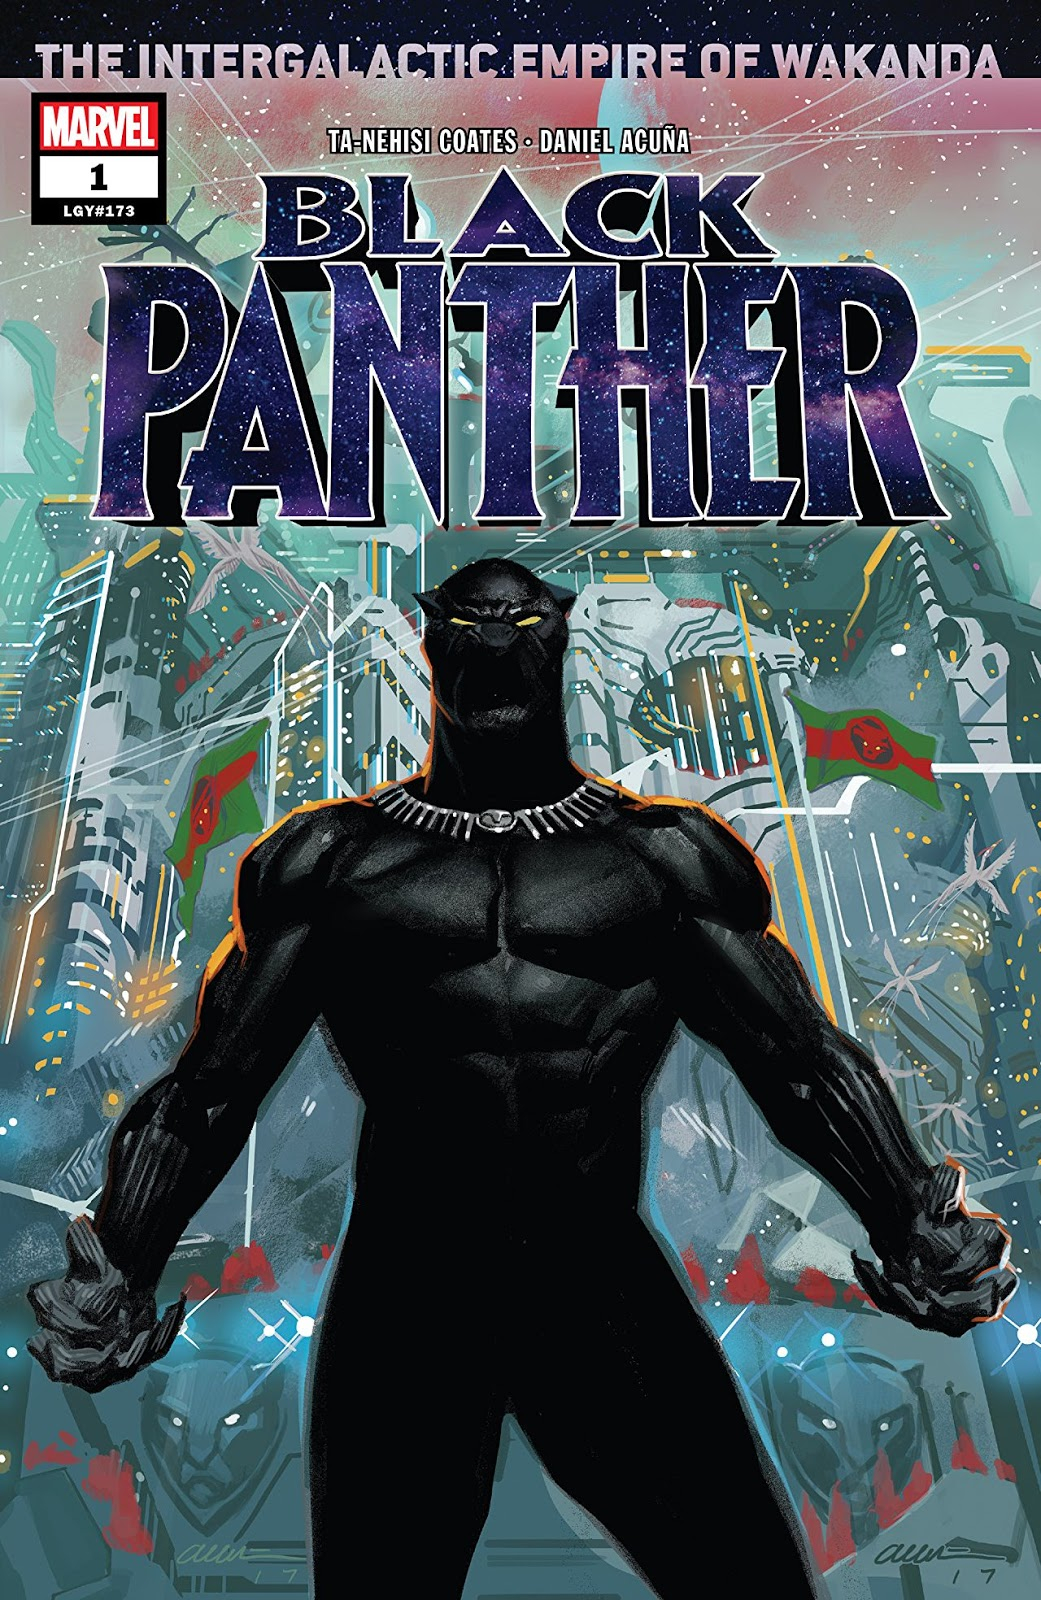 Marvel Offering Free Bundle of Black Panther Comics in